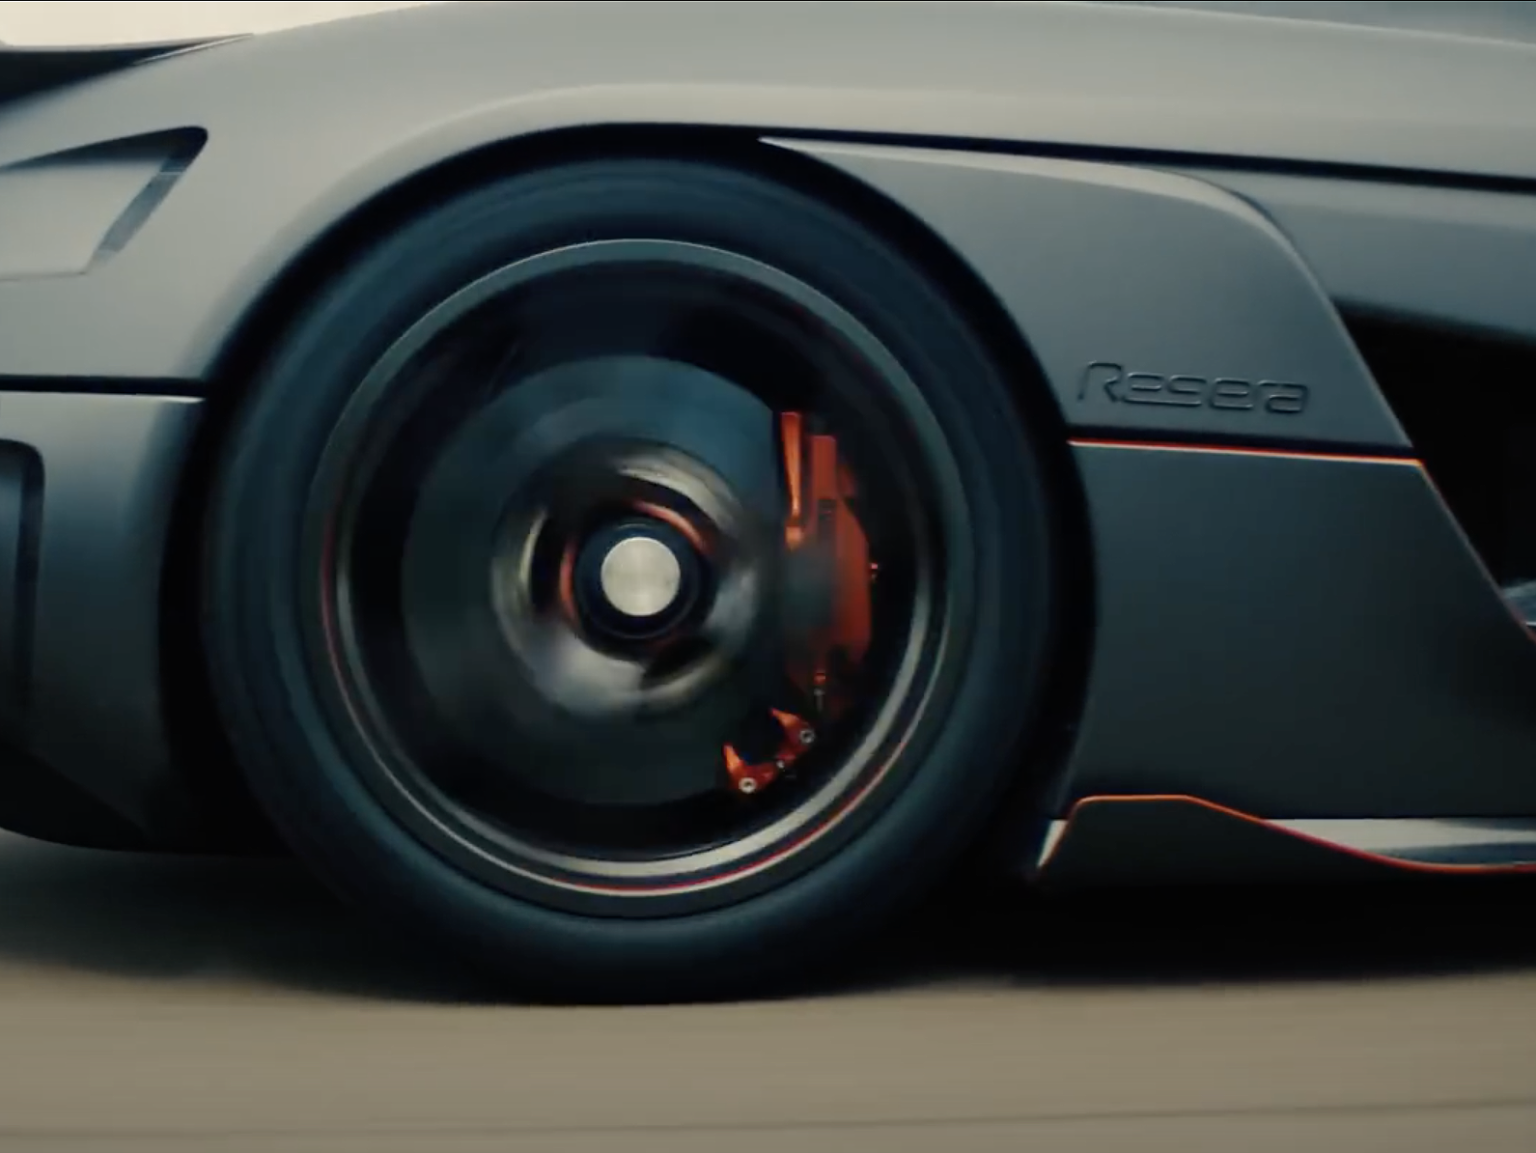 A new short film by Koenigsegg features the Regera super car.